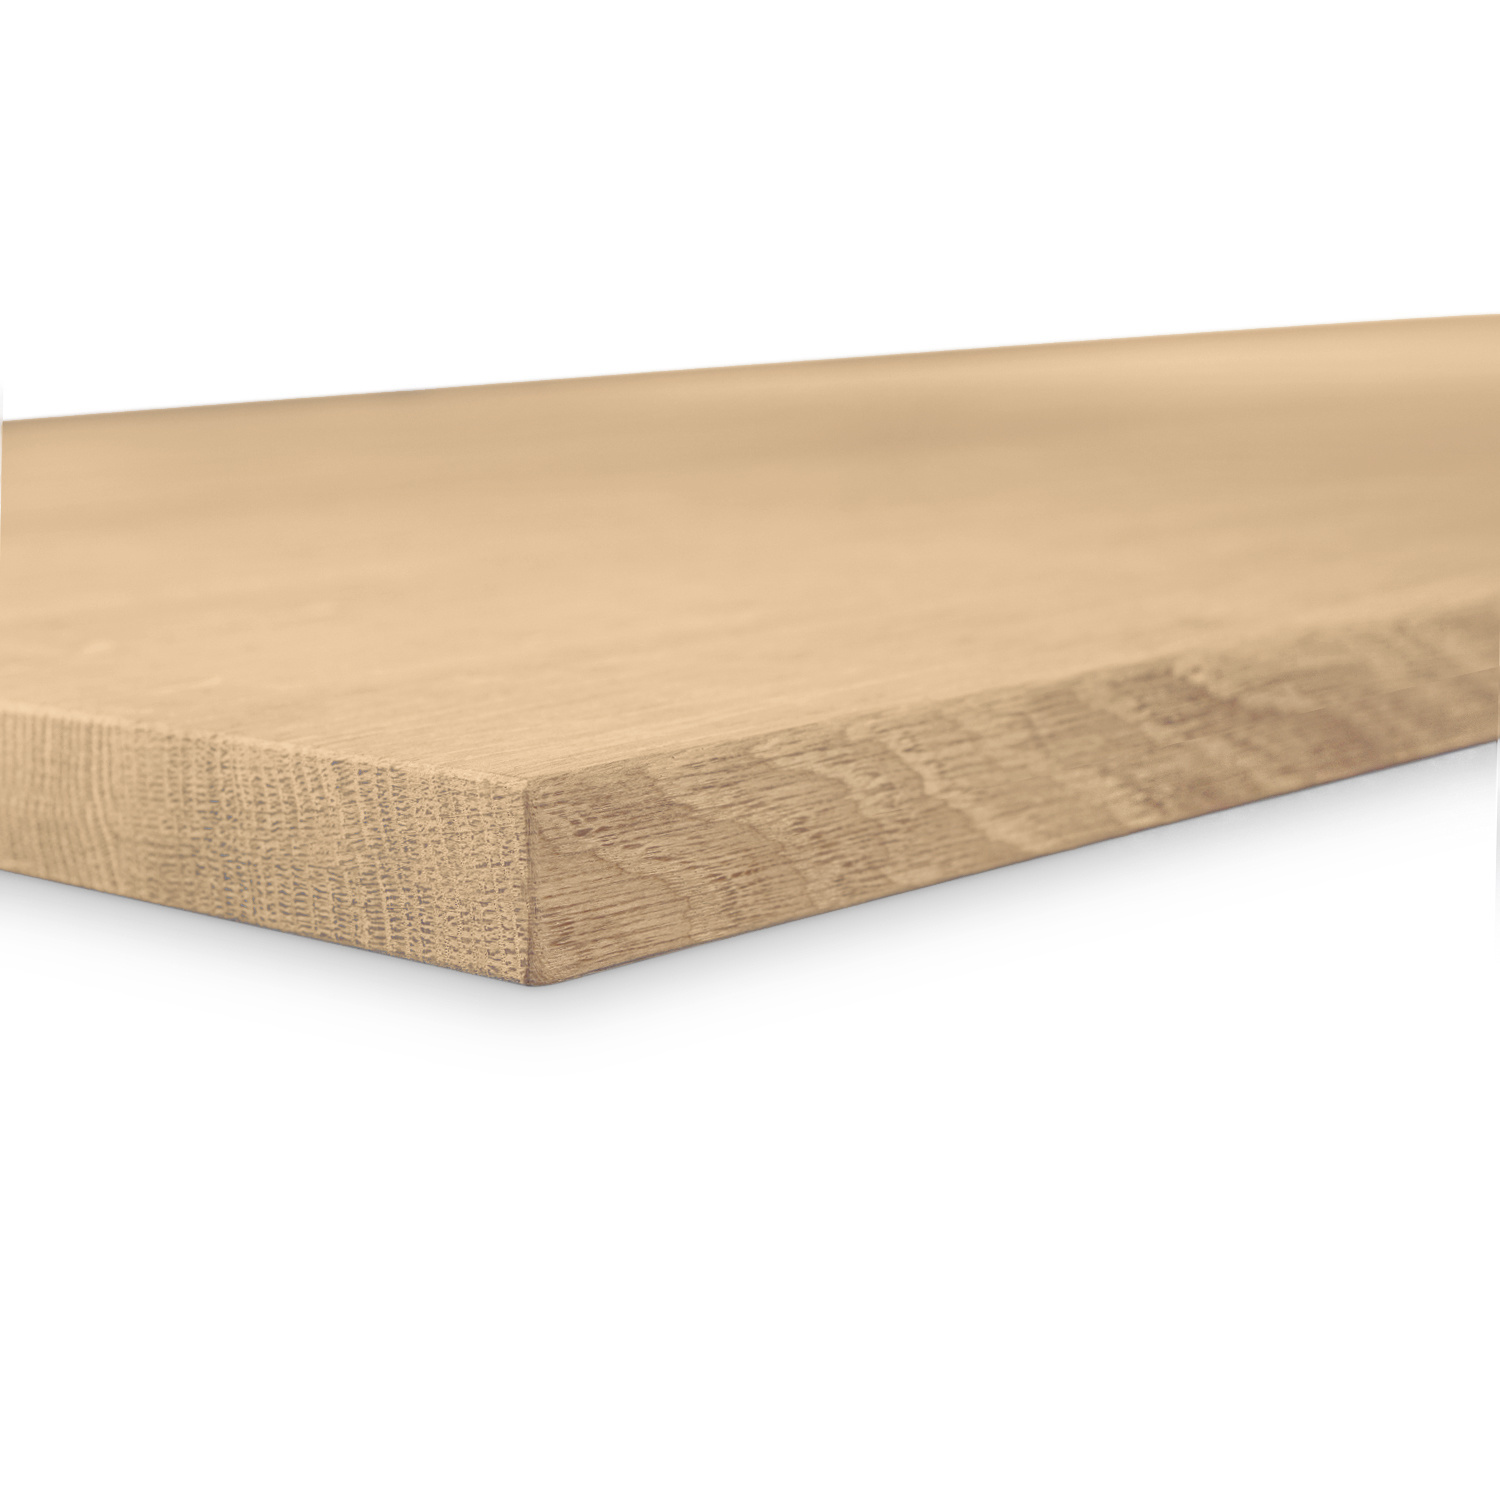  Eiken tafelblad - 2,7 cm dik (1-laag) - Diverse afmetingen - foutvrij Europees eikenhout - met brede lamellen (circa 10-12 cm) - verlijmd kd 8-12%